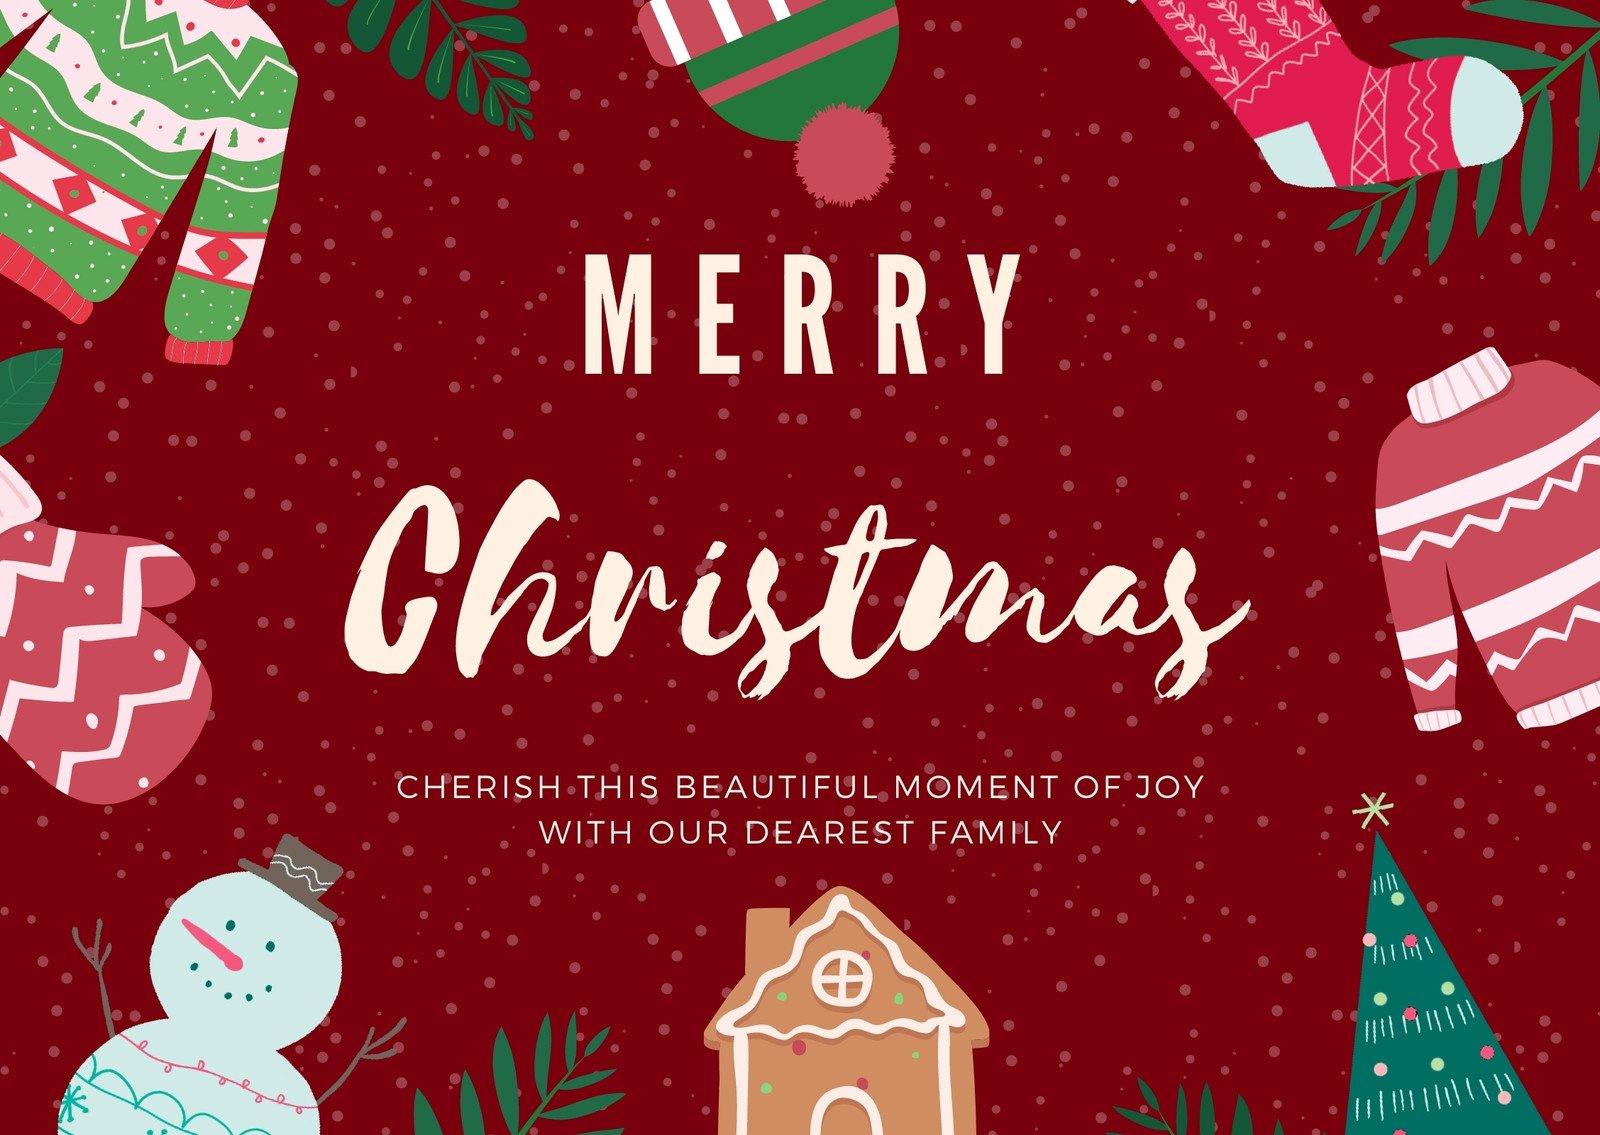 Religious Christmas Card Merry Christmas Card Greeting Card Holiday Card Xmas Greeting Card Digital Holiday Card Merry Xmas Printable Card